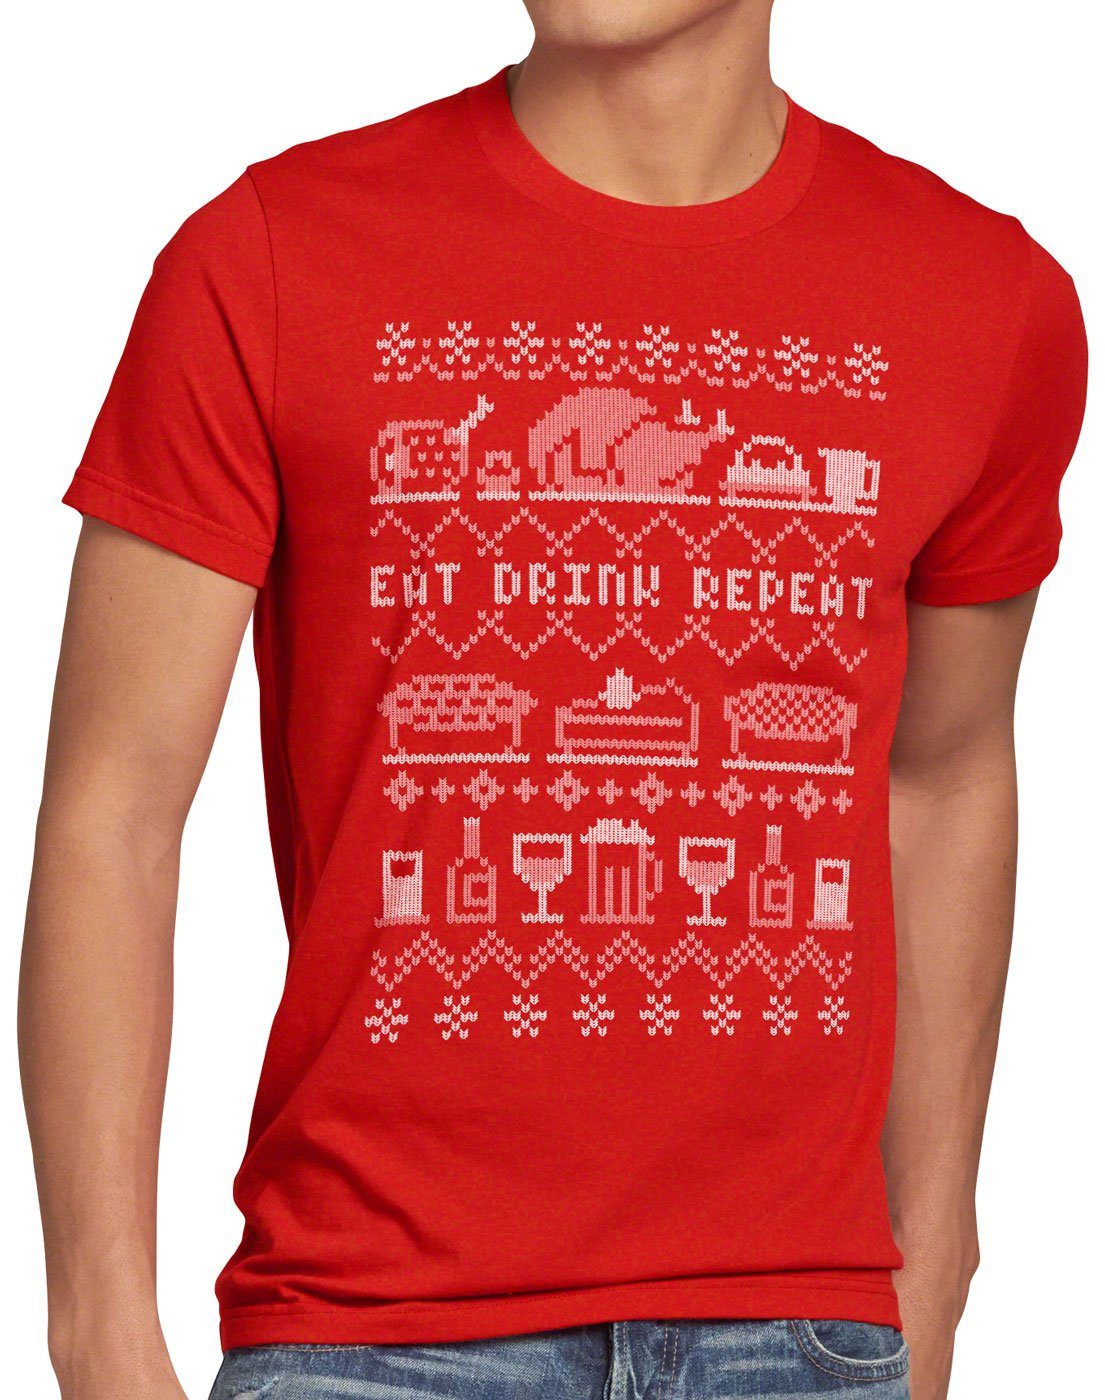 Repeat style3 Herren T-Shirt Sweater Eat fressen weihnachtsessen rot Print-Shirt Ugly Drink pulli x-mas feiertage